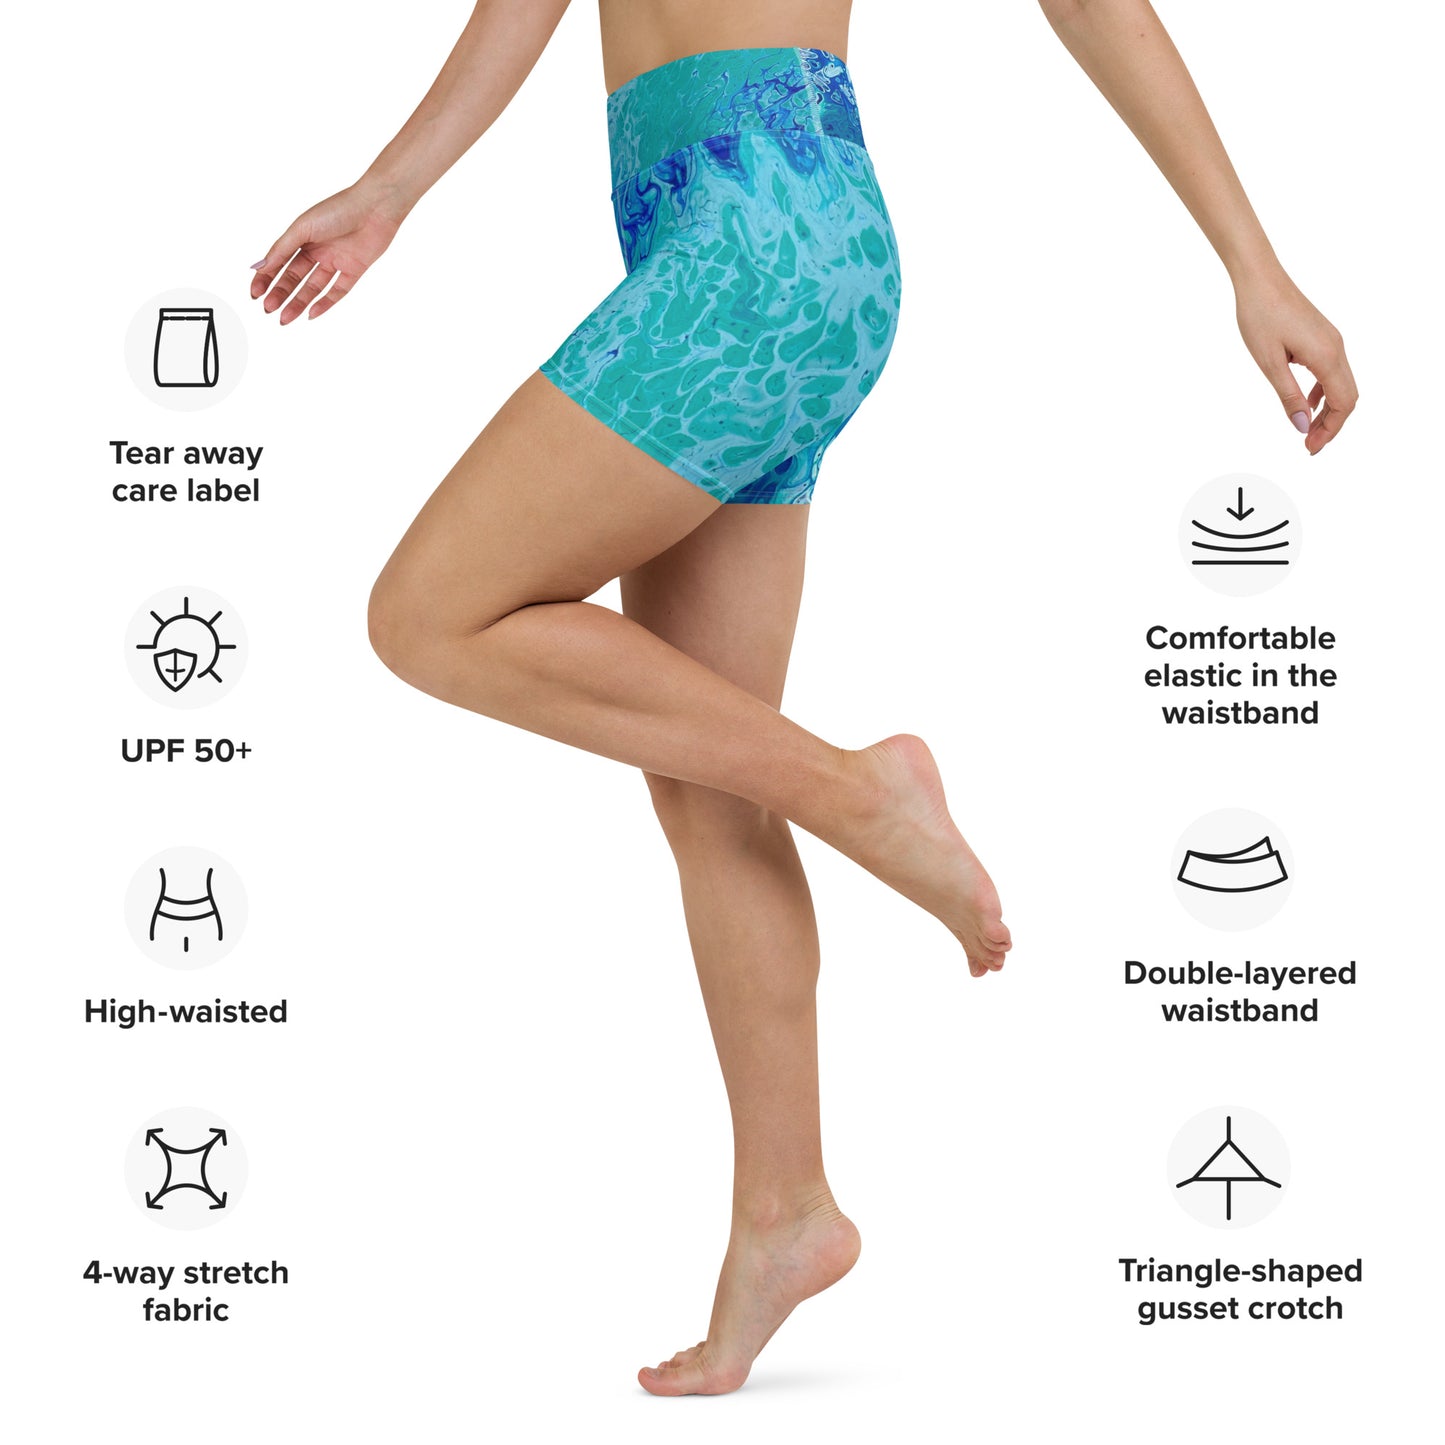 Ocean print Yoga Shorts